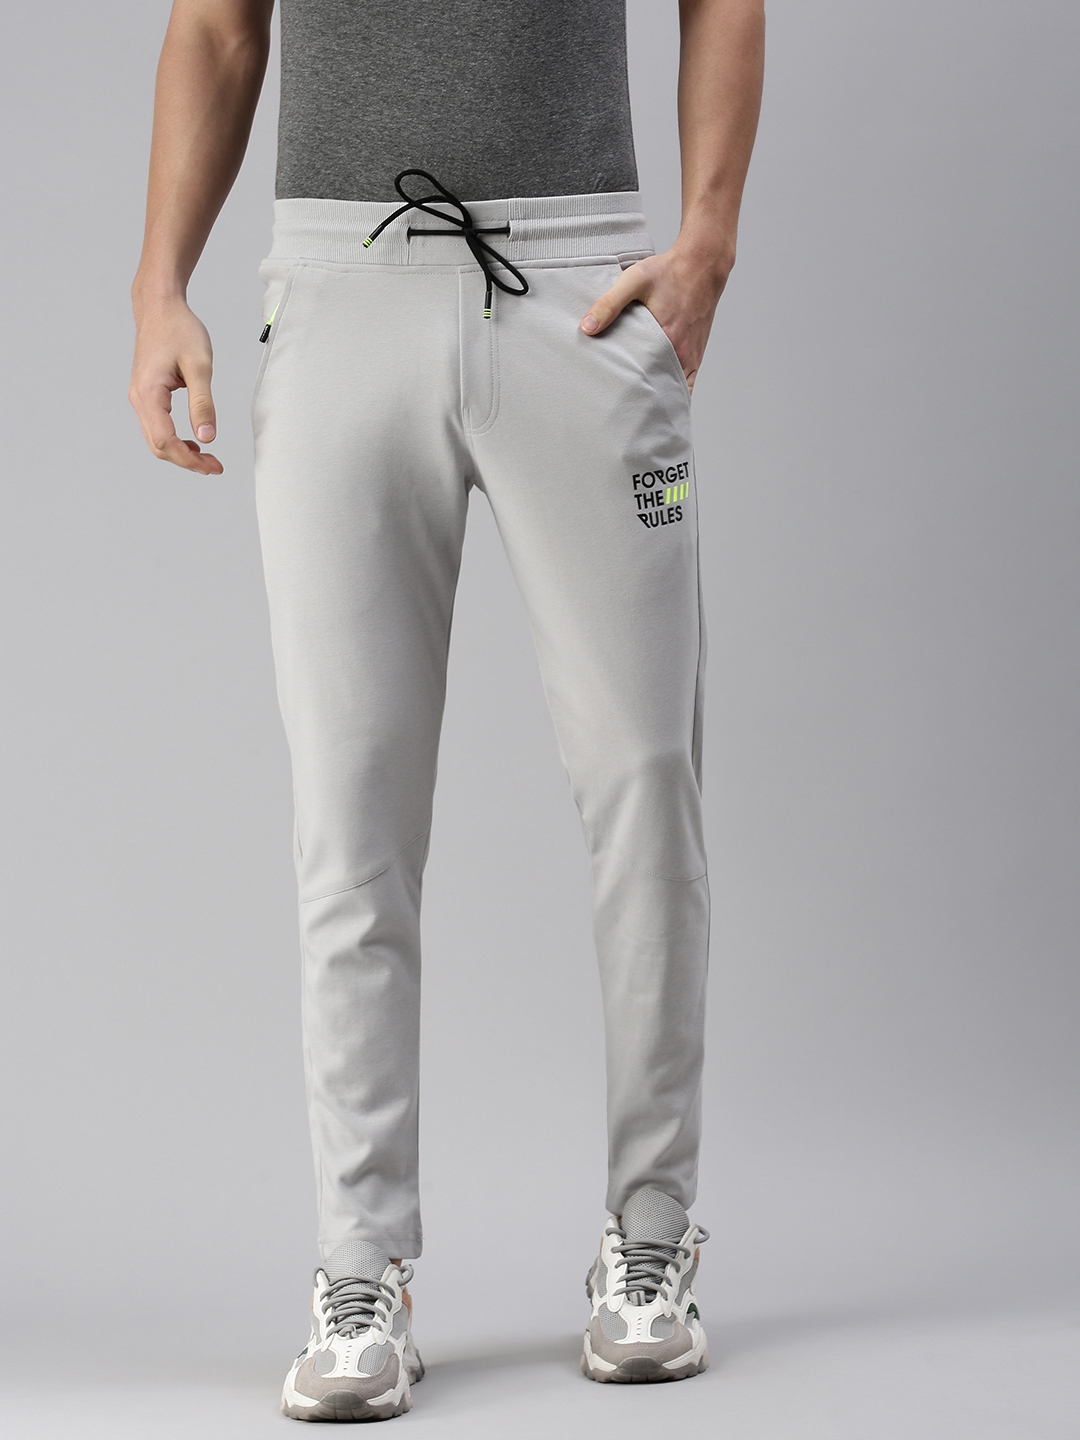 Online Branded Track Pants for Men - 24 Street